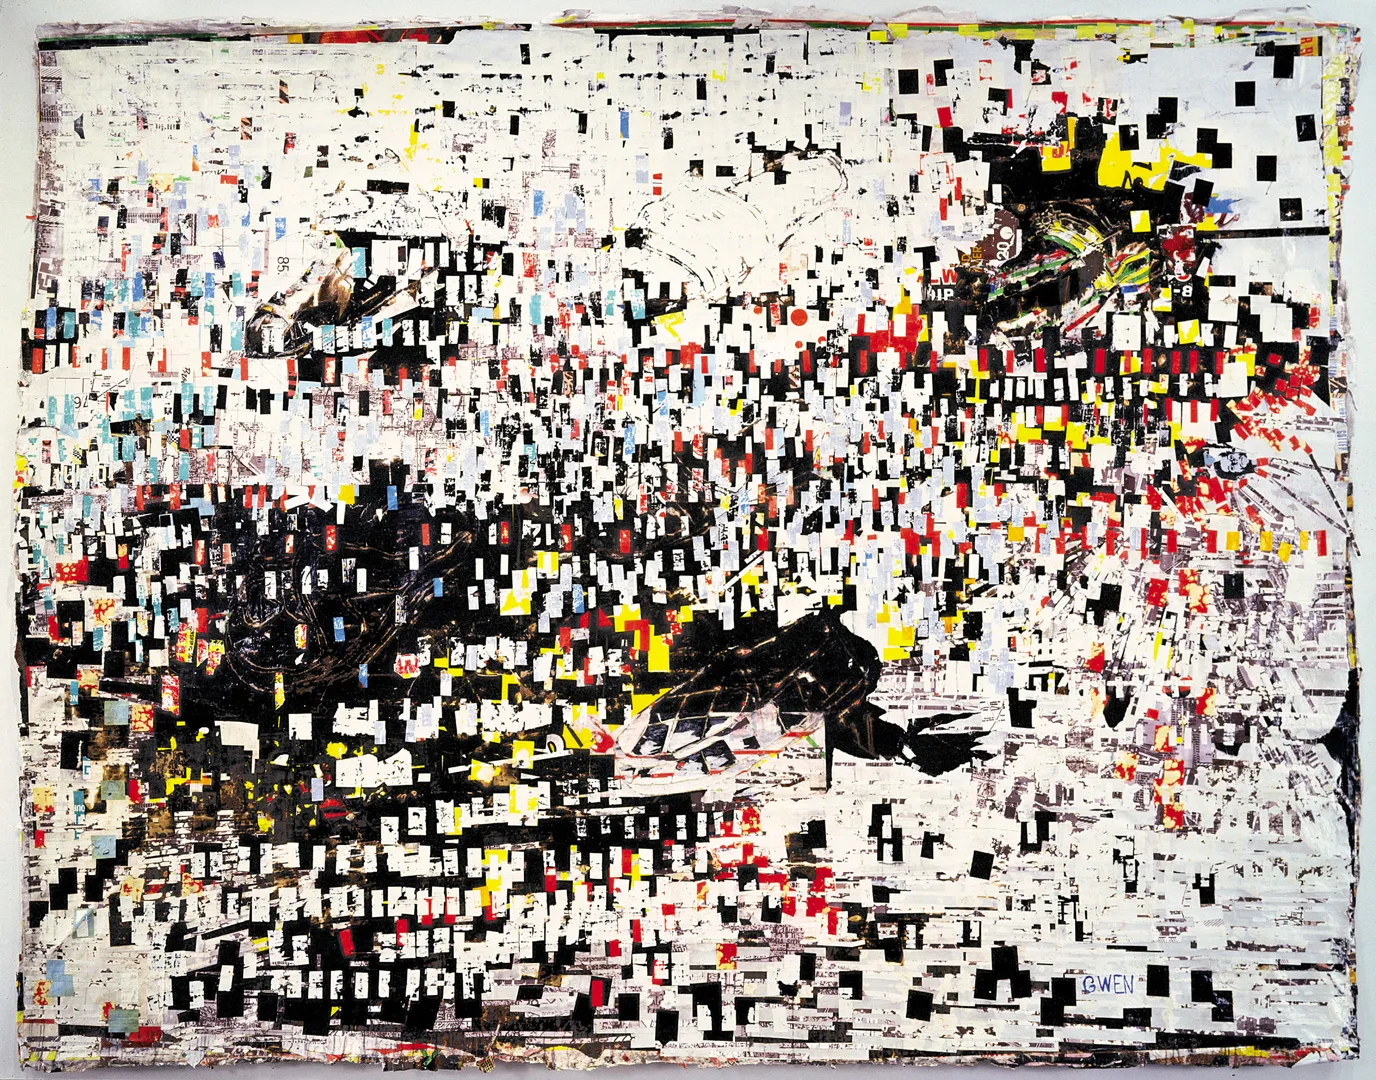 Mark Bradford - (Untitled) a.k.a. Gwen, 2005 - 2006, mixed media on canvas